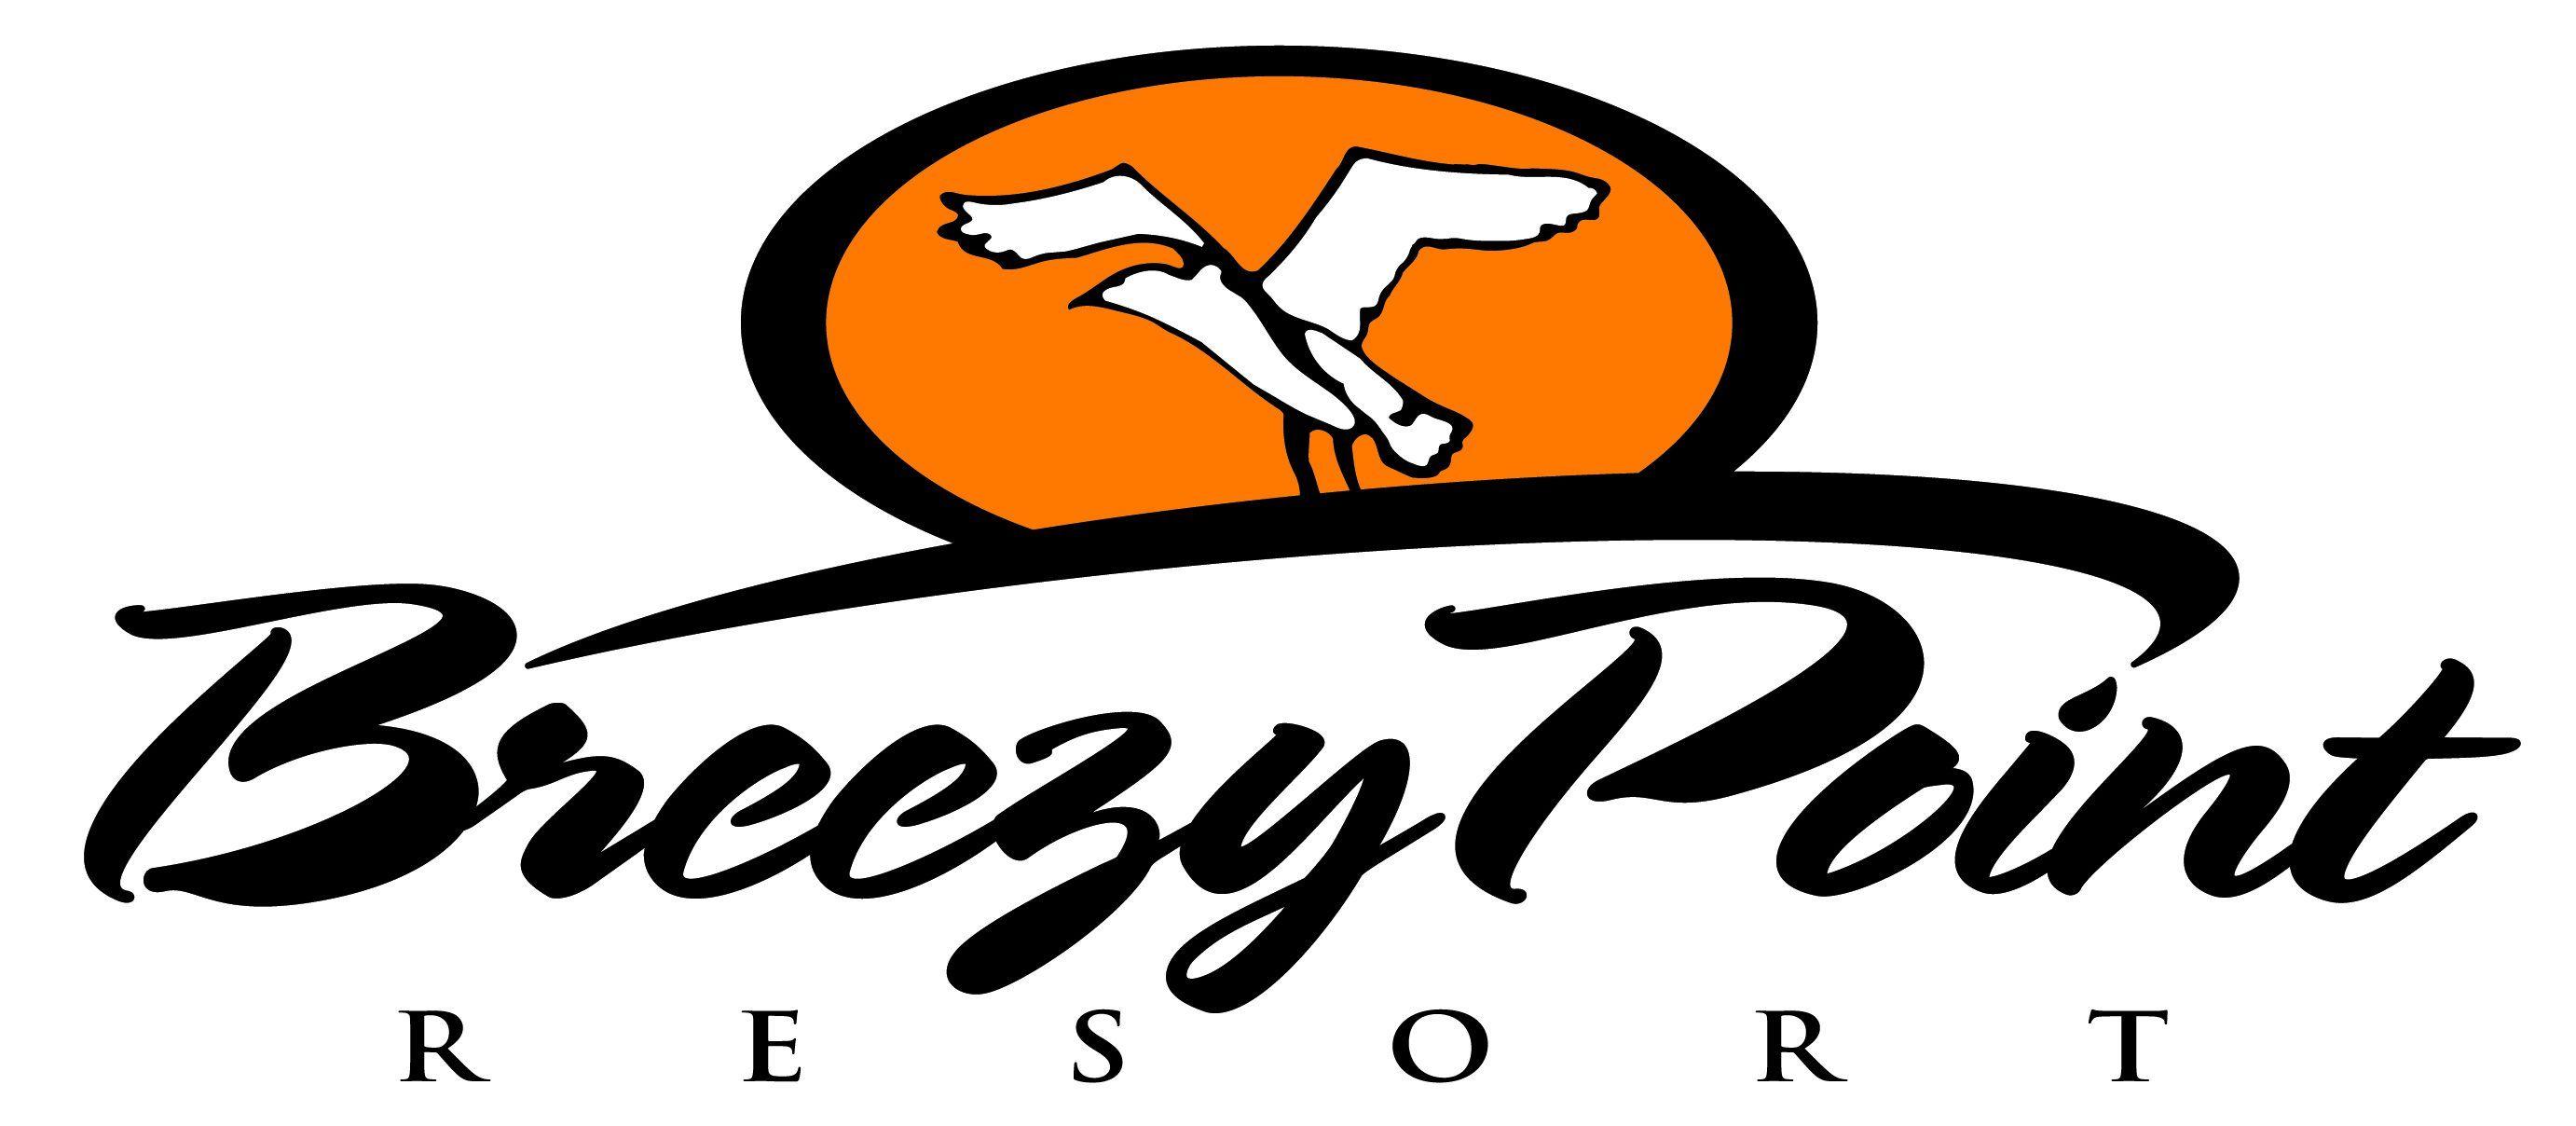 Breezy Logo - Breezy Point Resort Media Photo Floorplans. Breezy Point